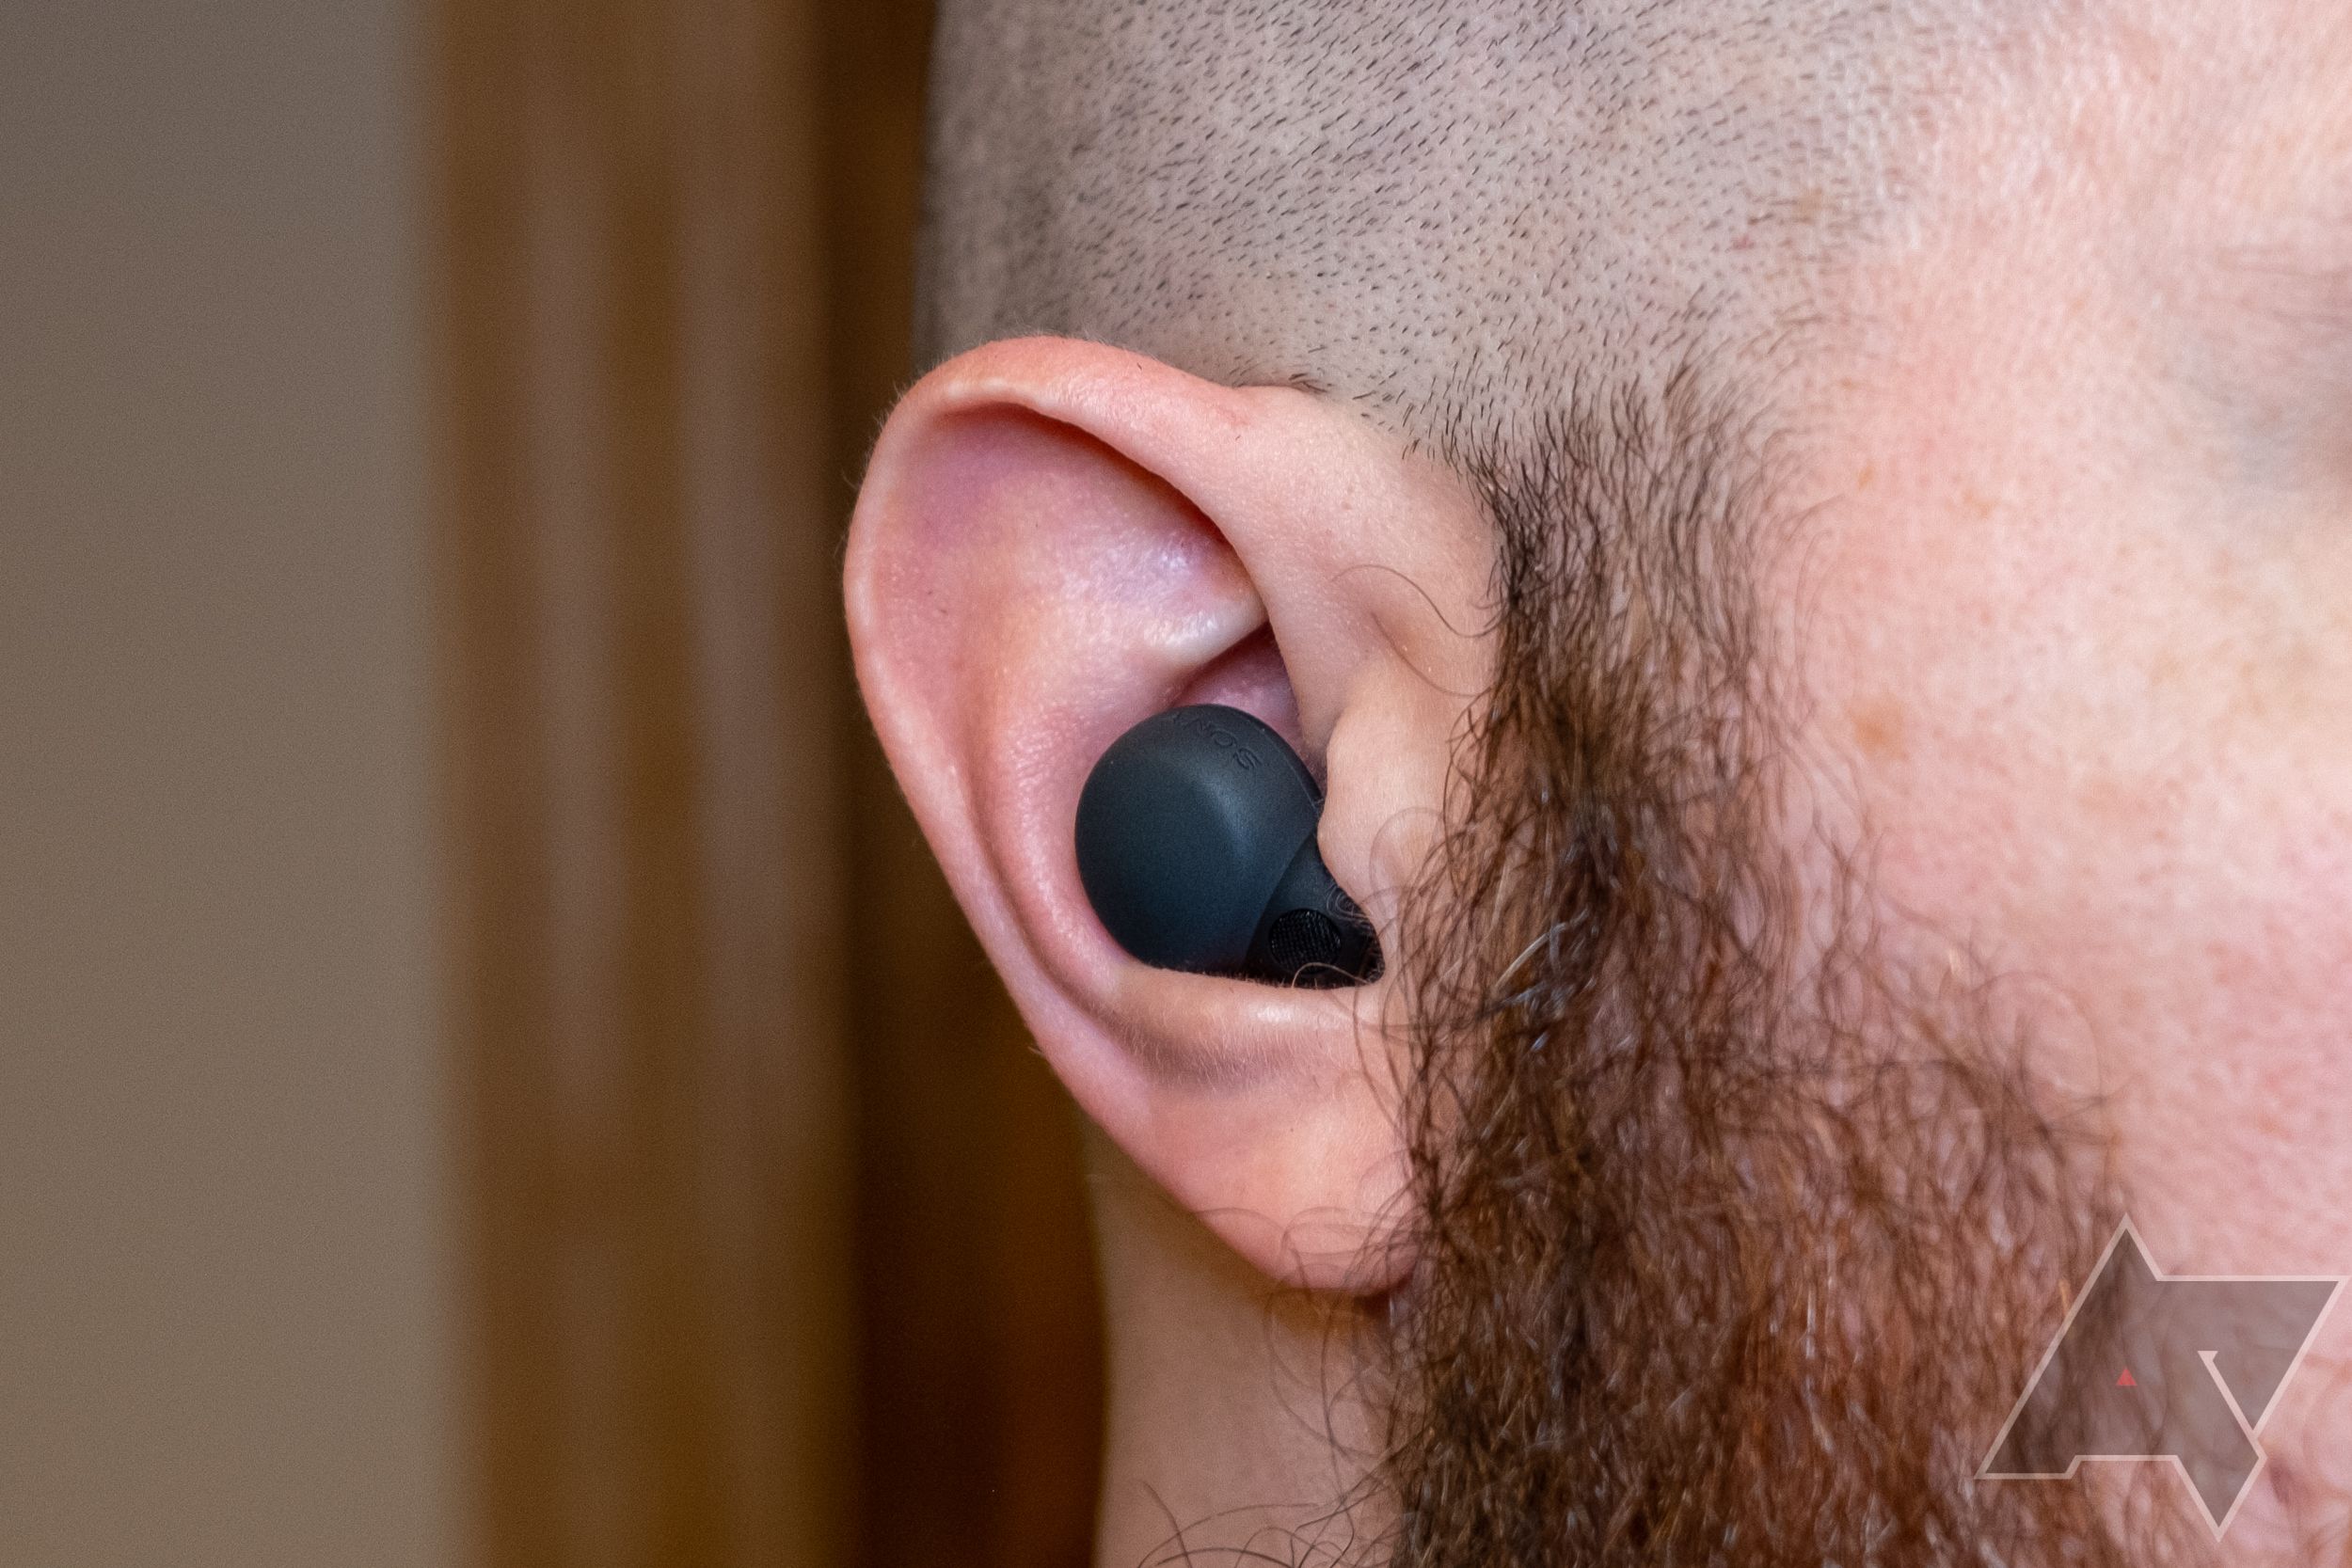 Sony LinkBuds S review: Impressive $200 ANC wireless earbuds